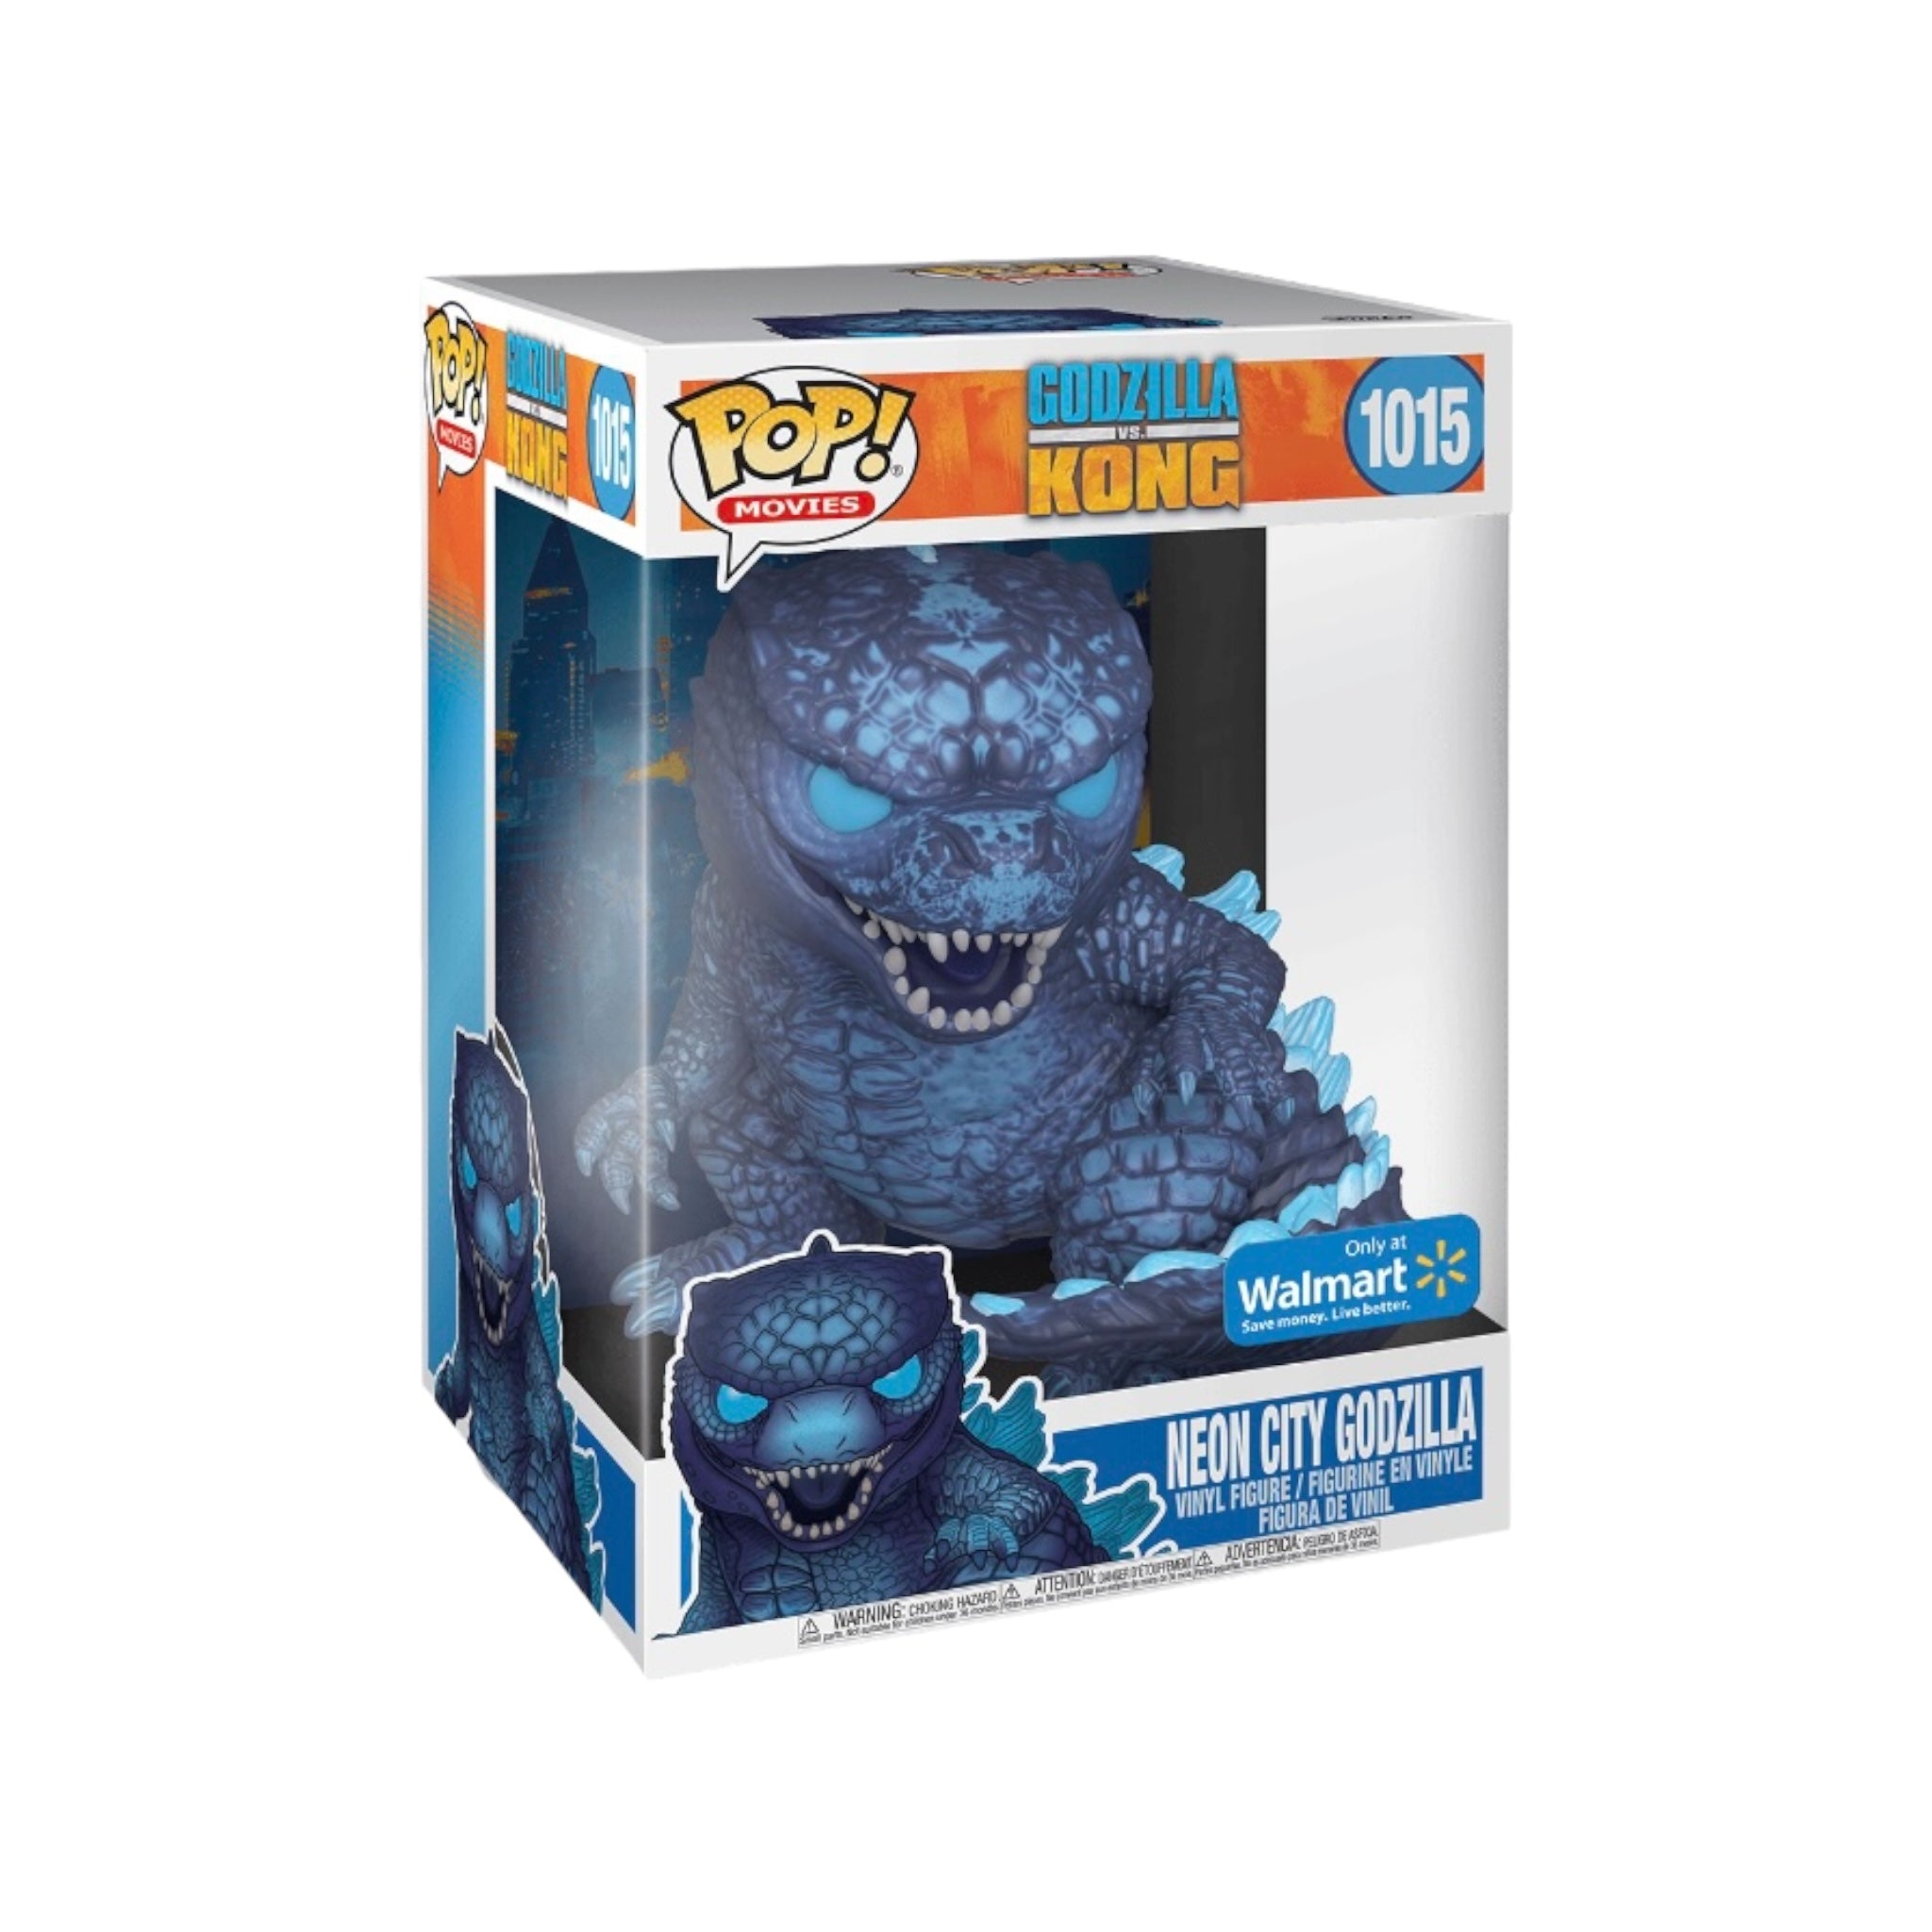 Neon City Godzilla #1015 10" Funko Pop! - Godzilla Vs. Kong - Walmart Exclusive - Condition 8.75/10